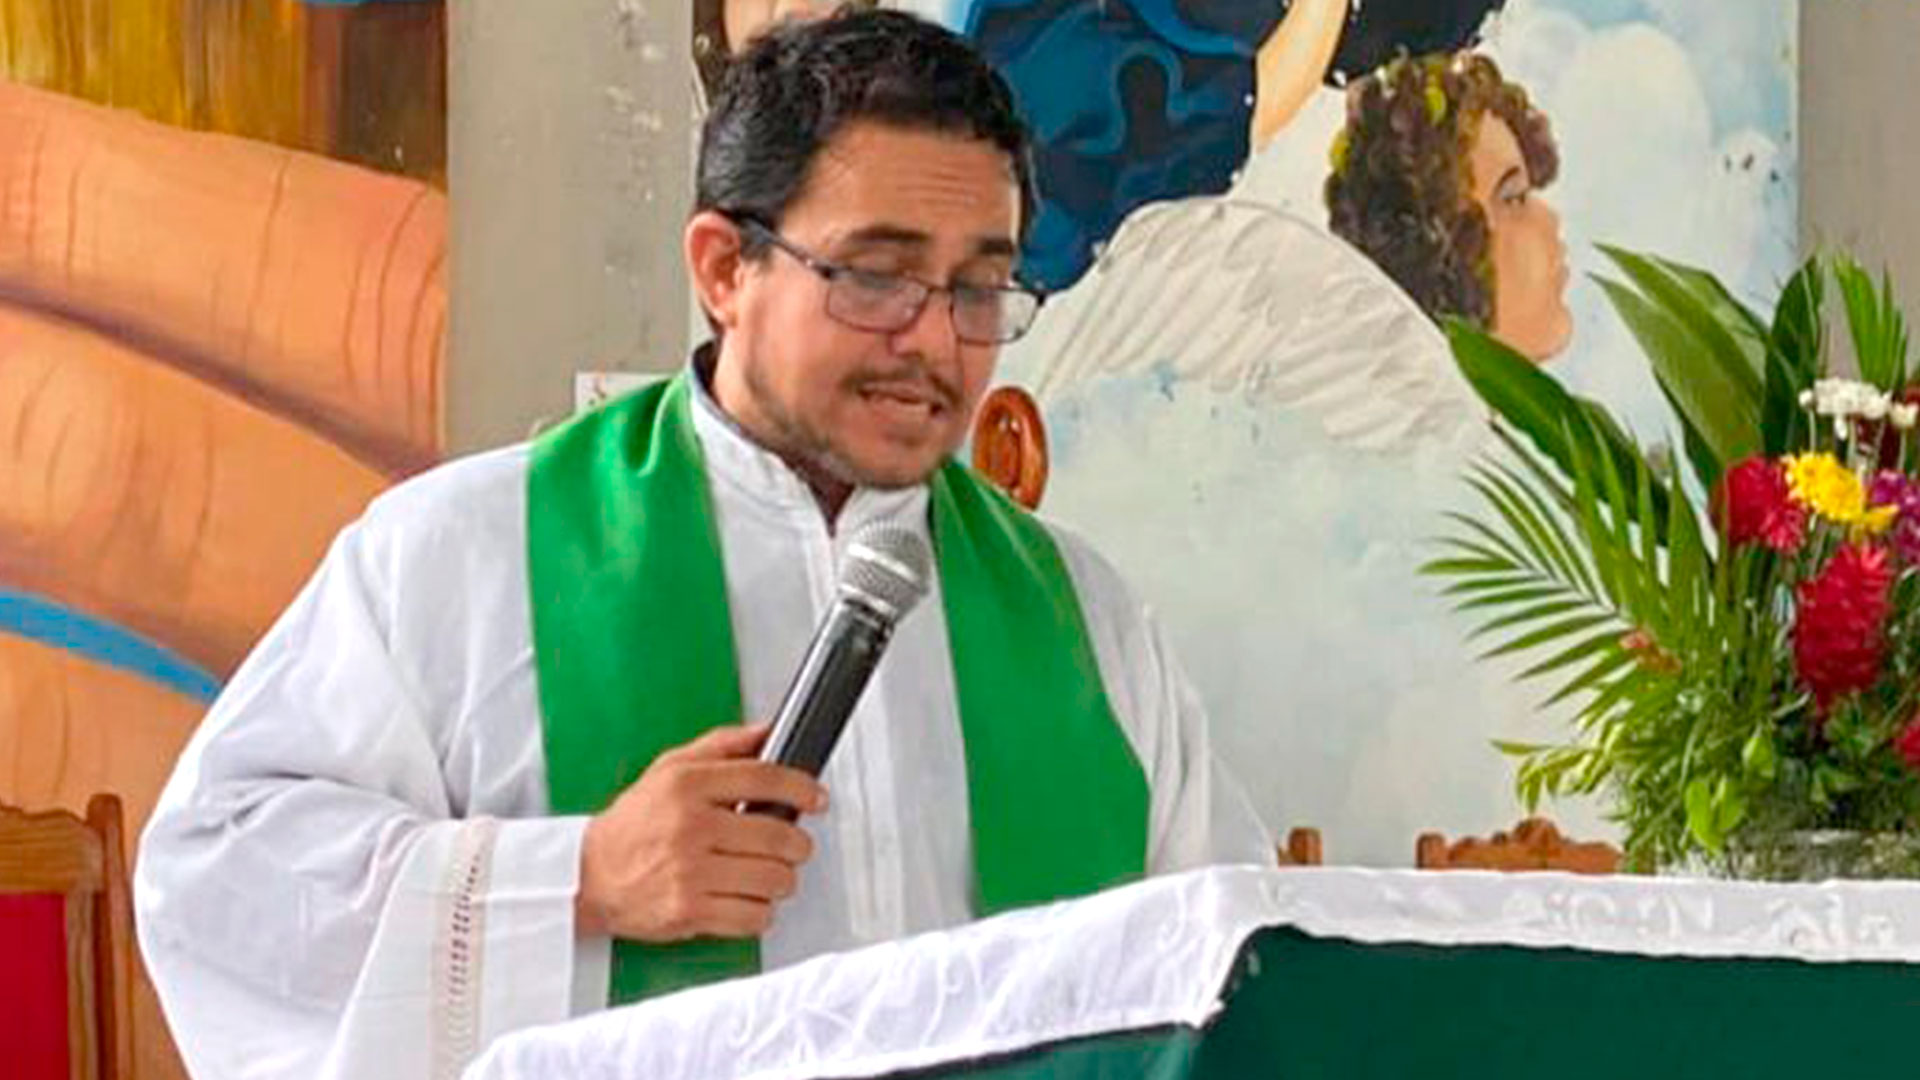 El sacerdote Óscar Danilo Benavidez Dávila